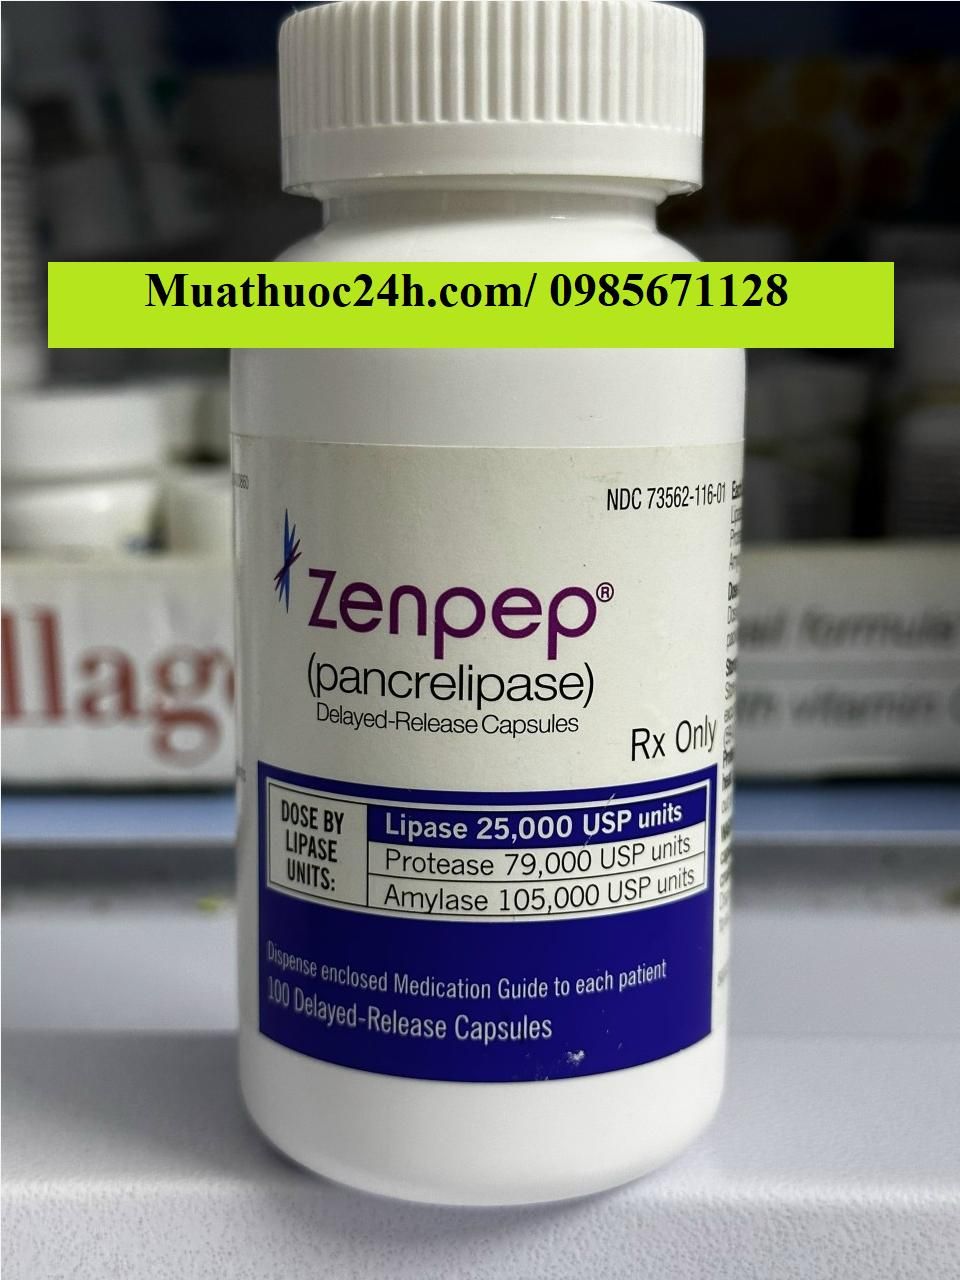 Thuốc Zenpep Pancrelipase giá bao nhiêu mua ở đâu?